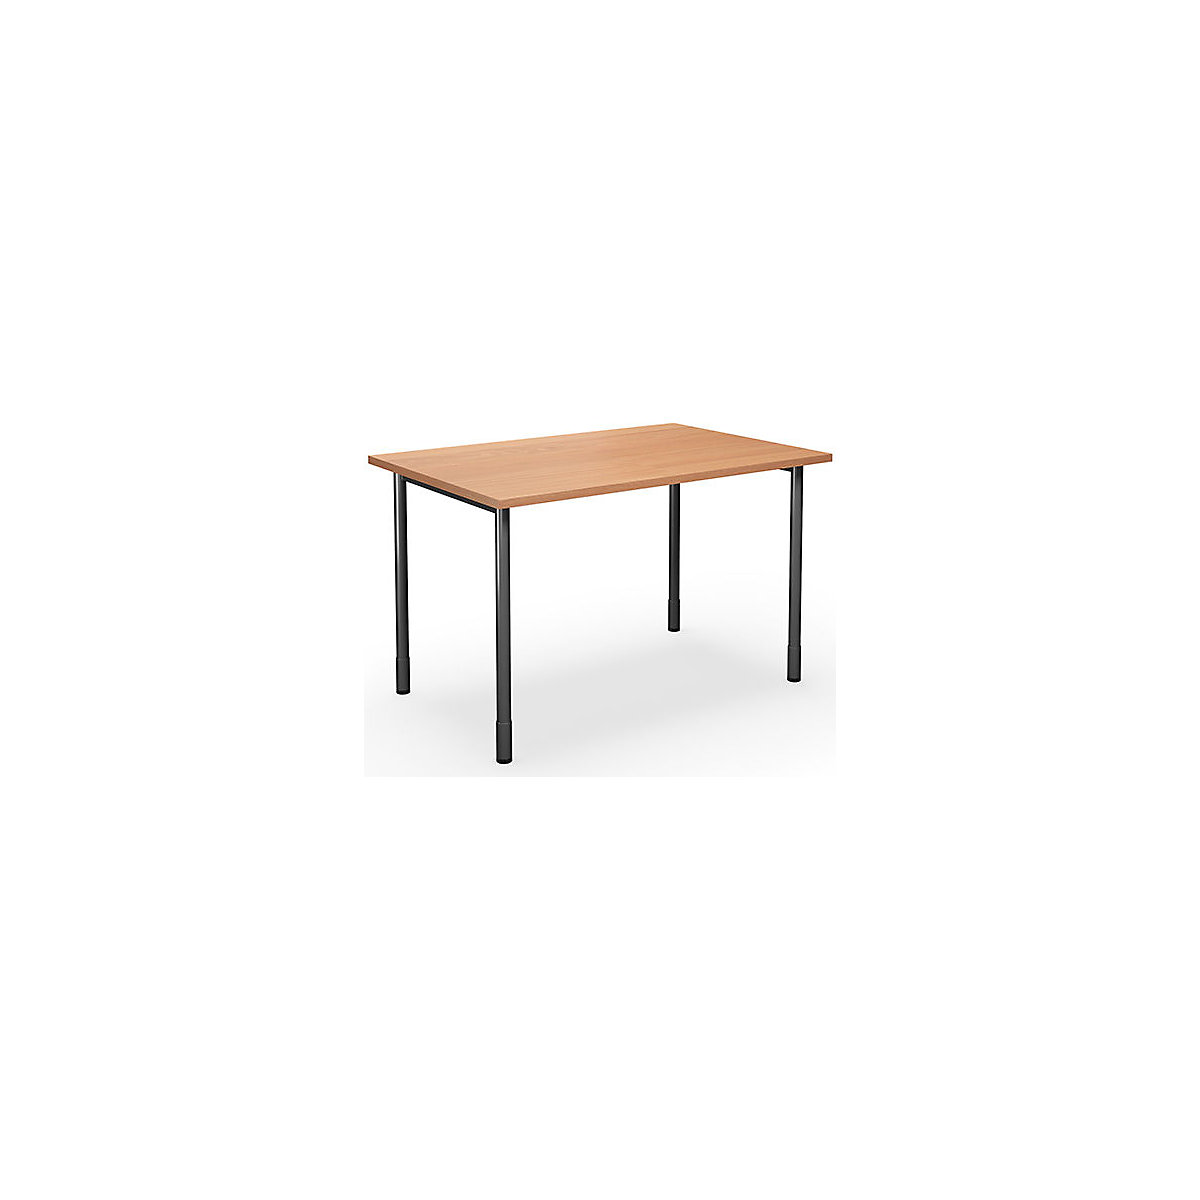 DUO-C multi-purpose desk, straight tabletop